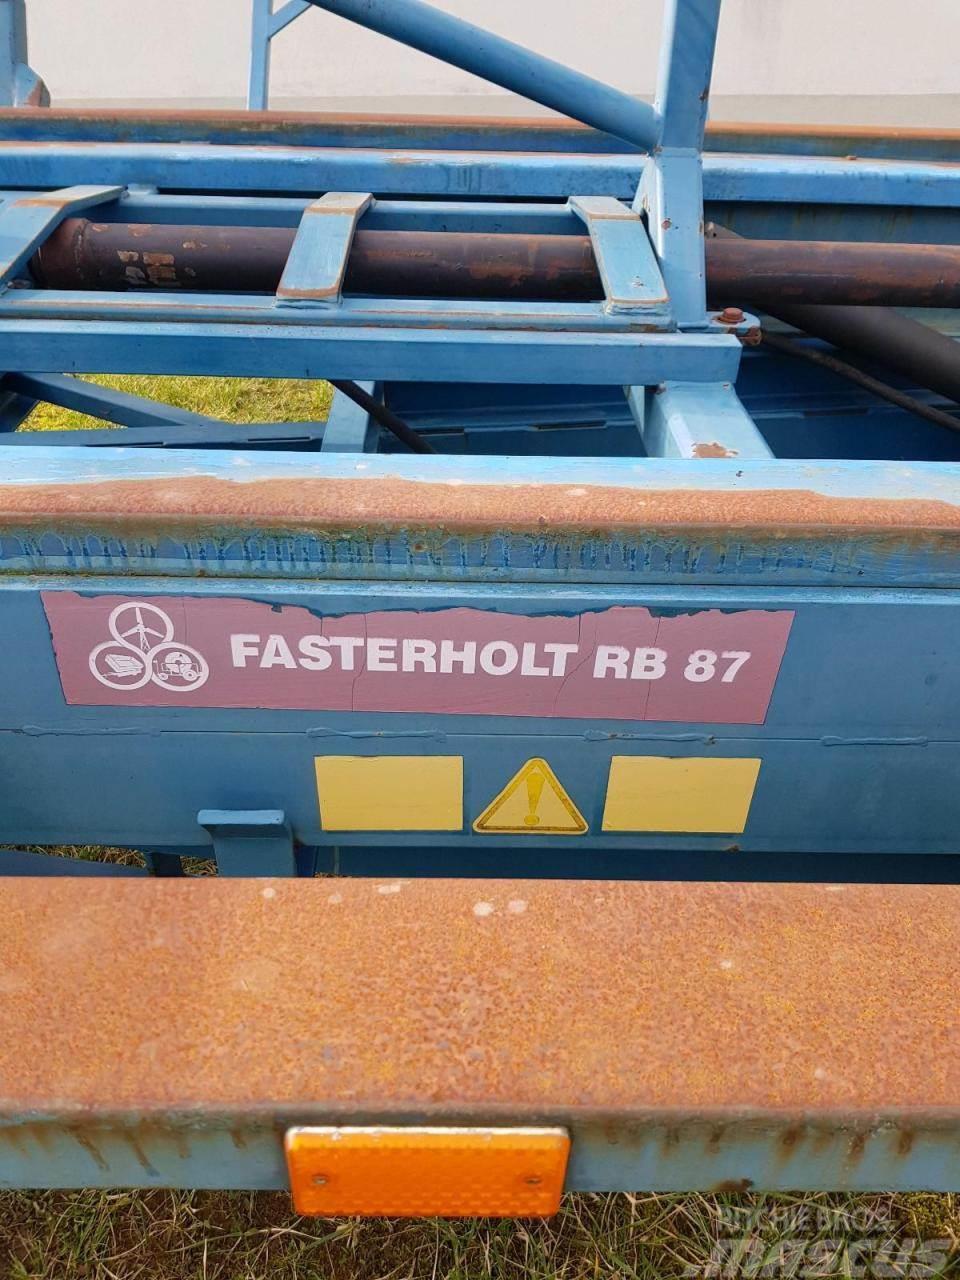 Fasterholt RB 87 Bale trailers